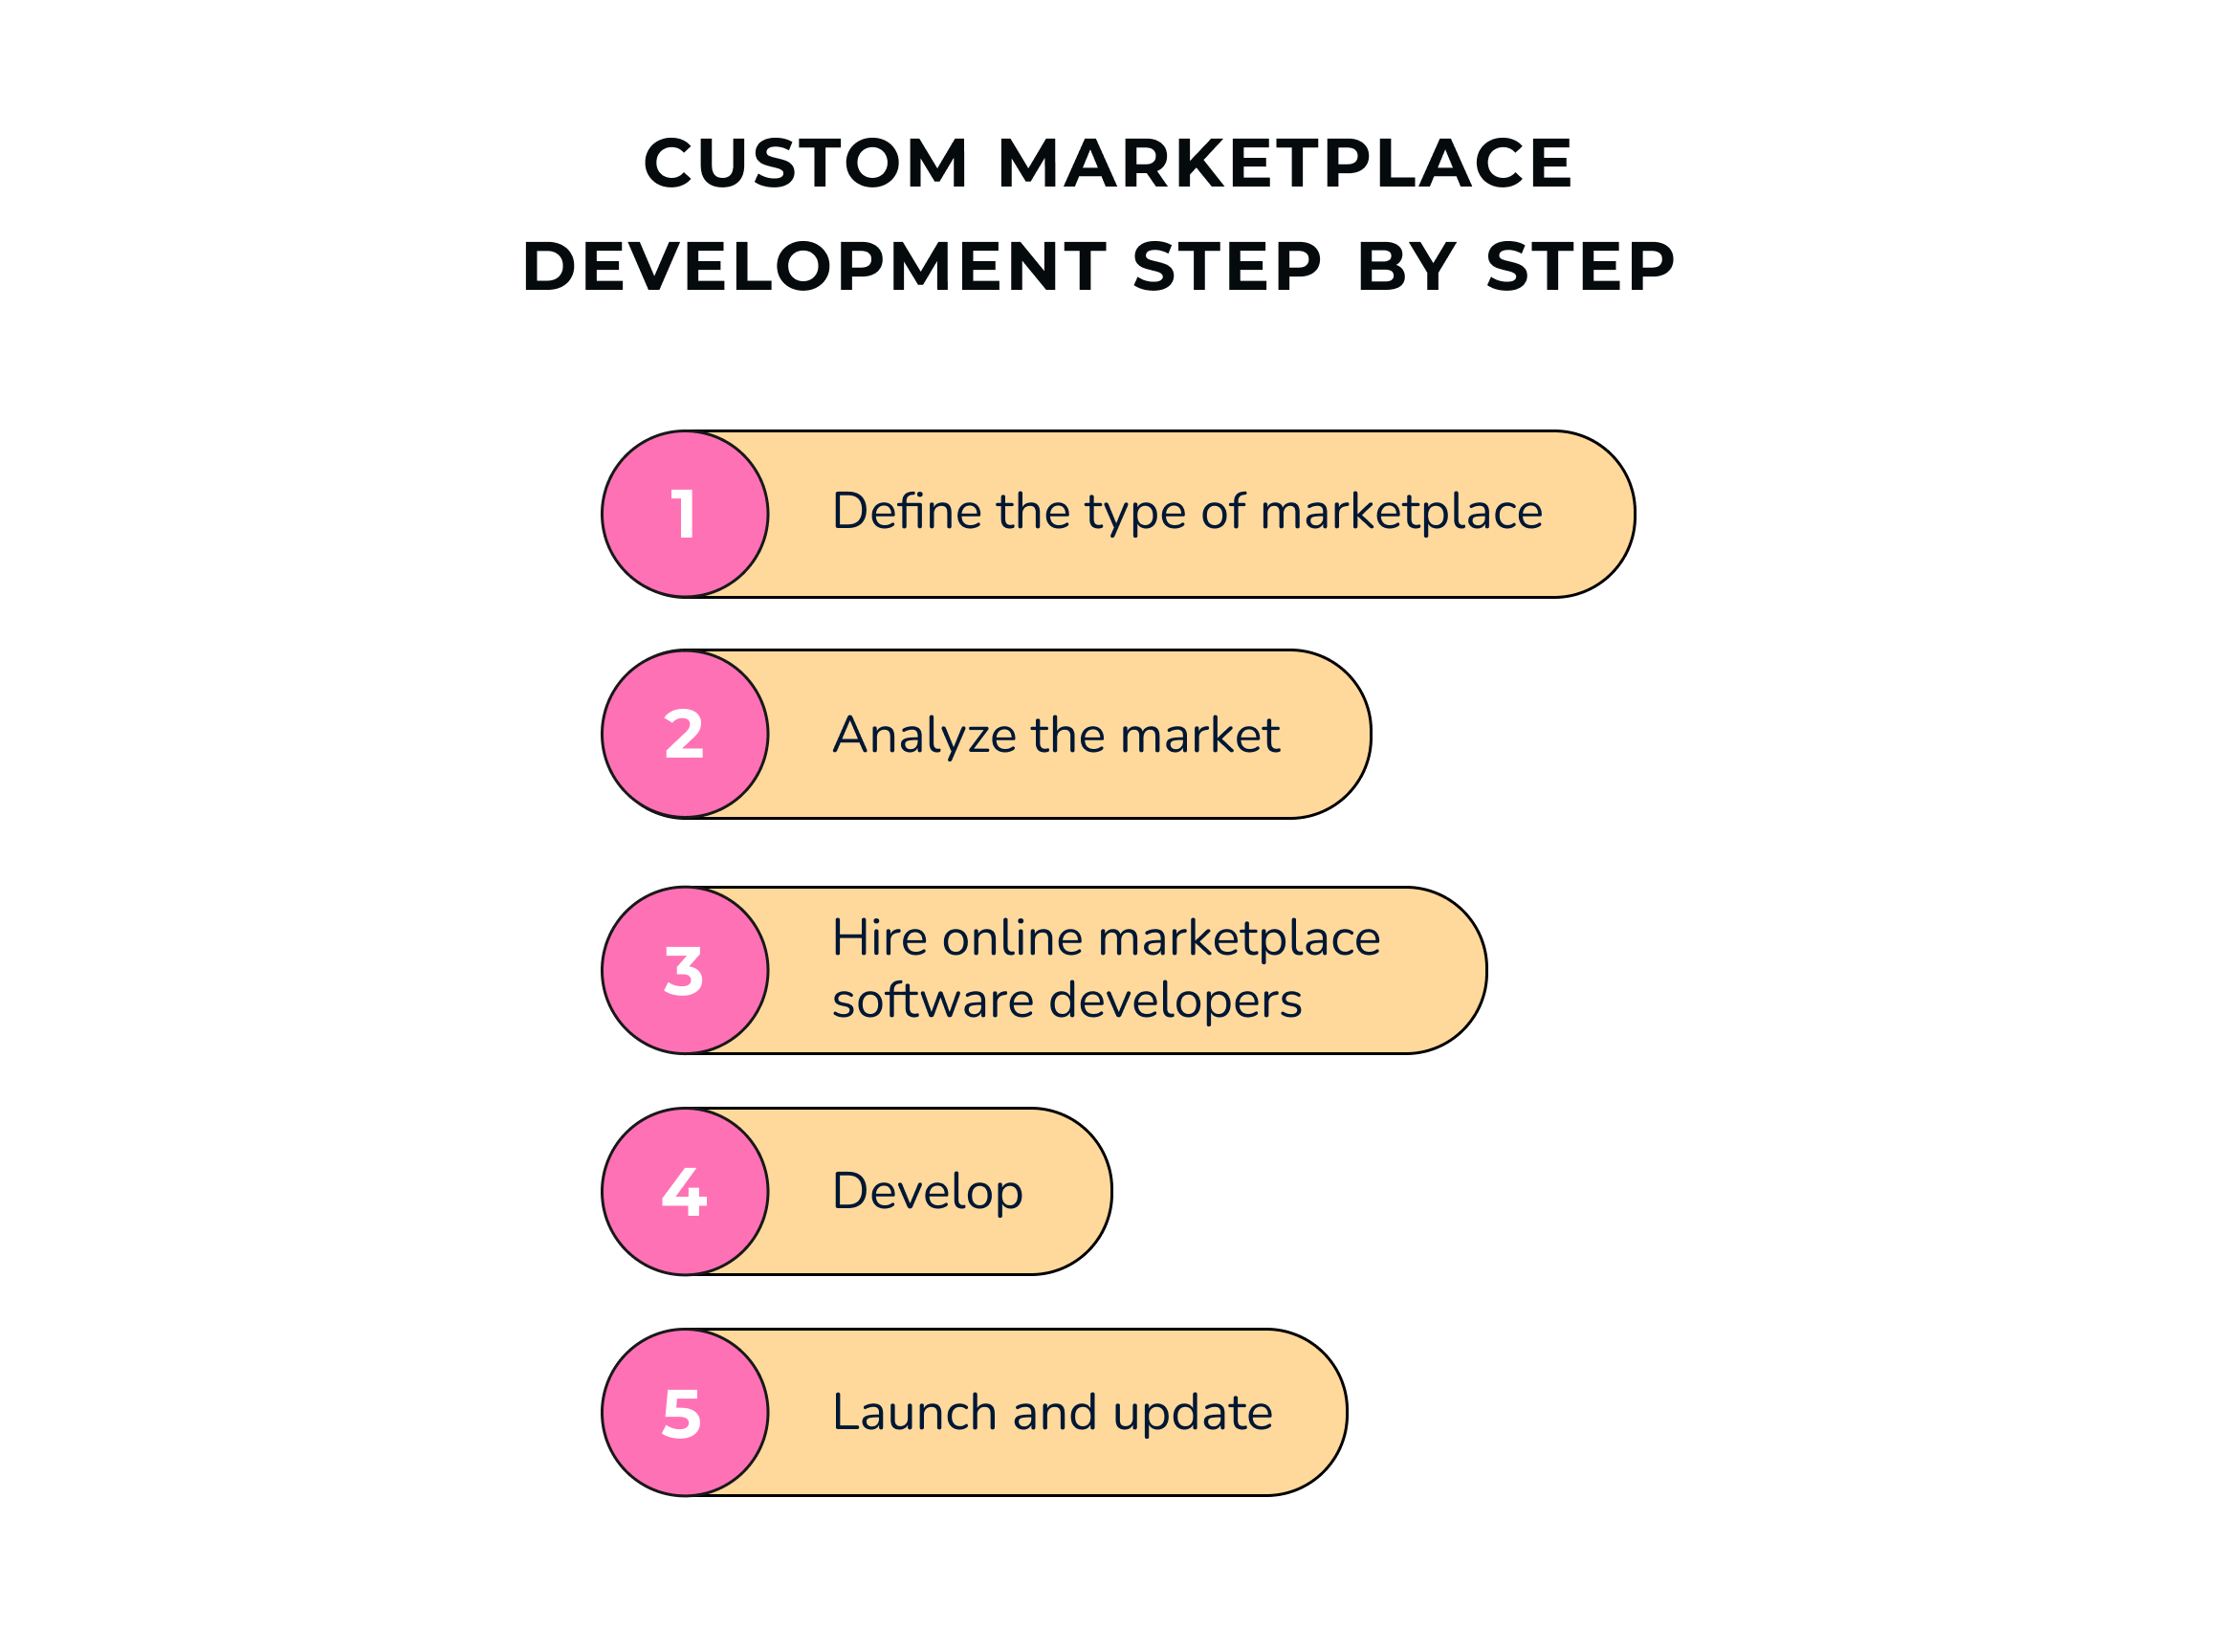 Custom marketplace development